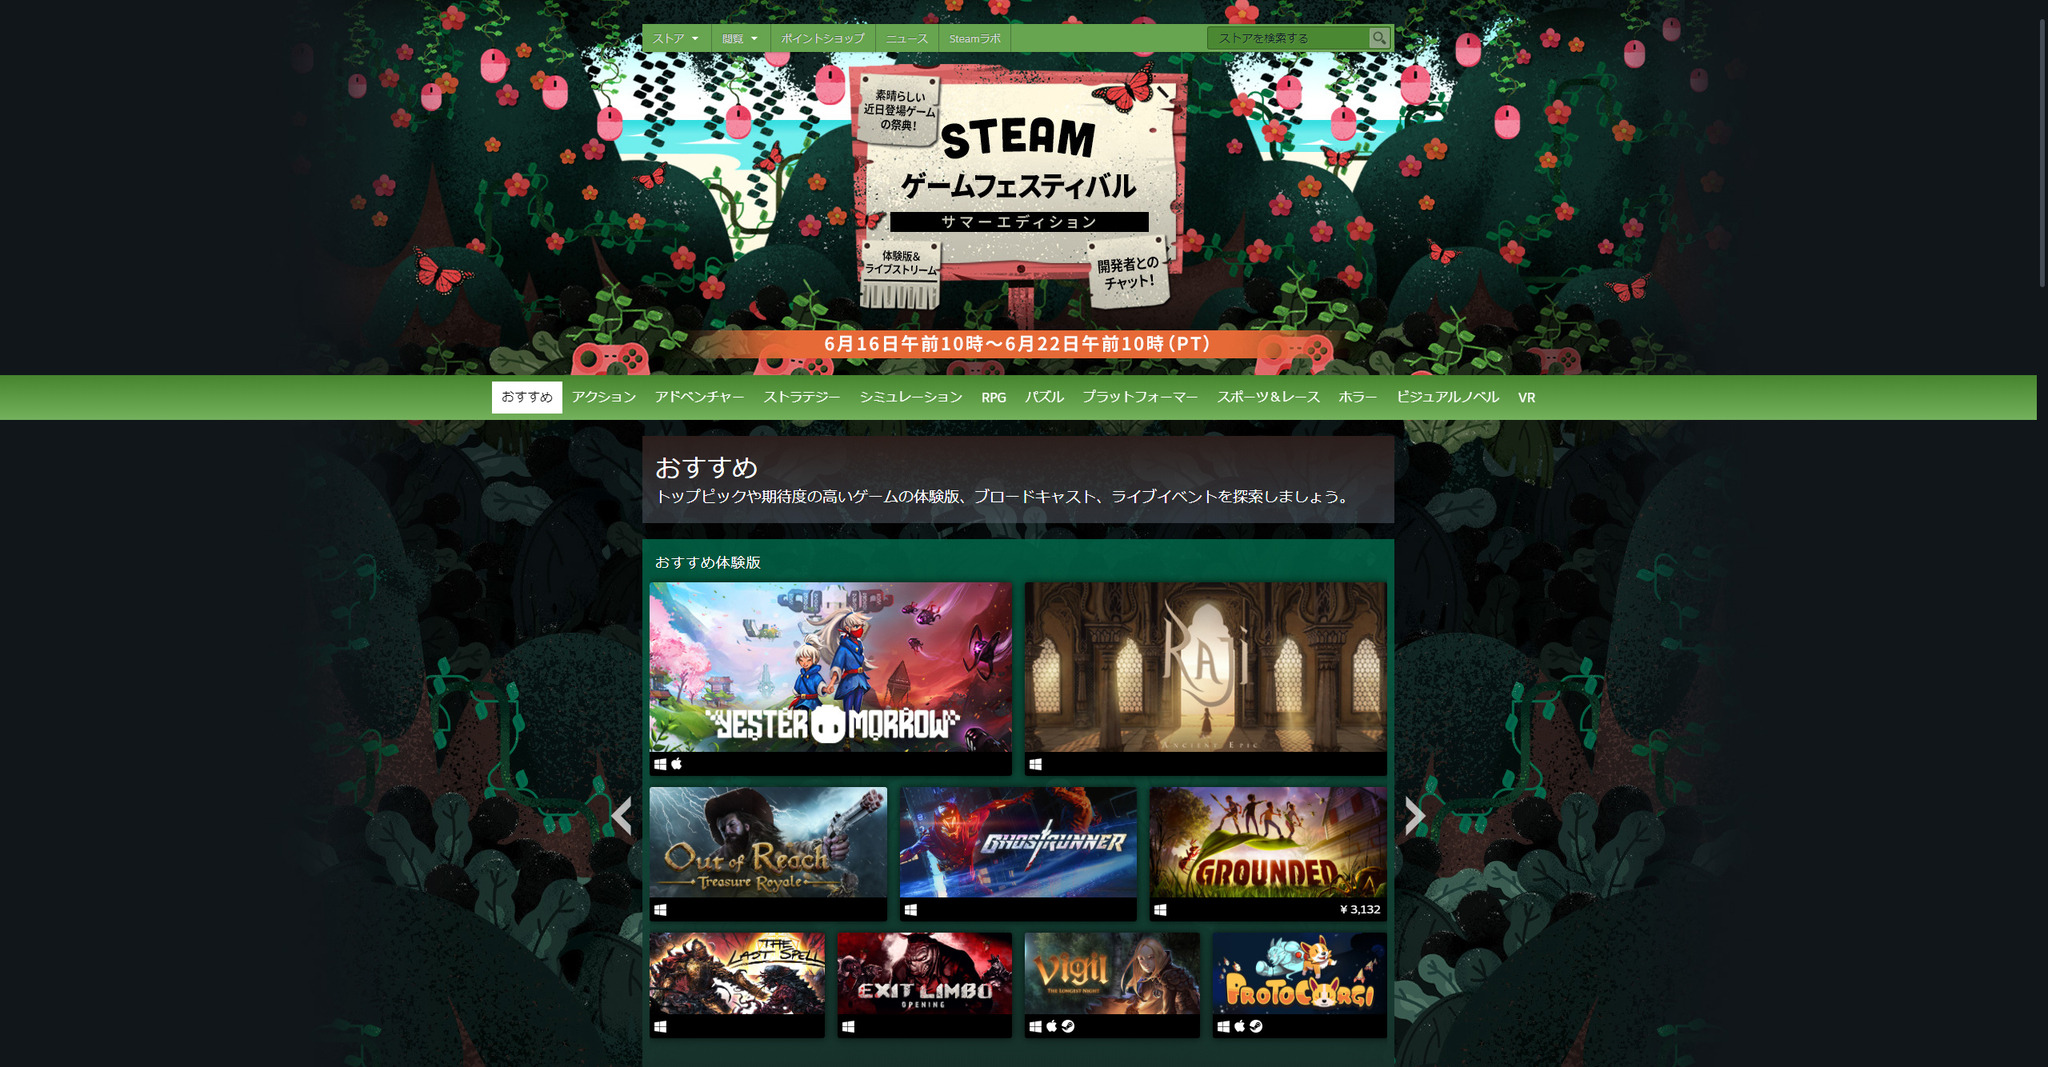 Steamゲームフェスティバル 再び オータムエディション が10月開催へ Game Spark 国内 海外ゲーム情報サイト